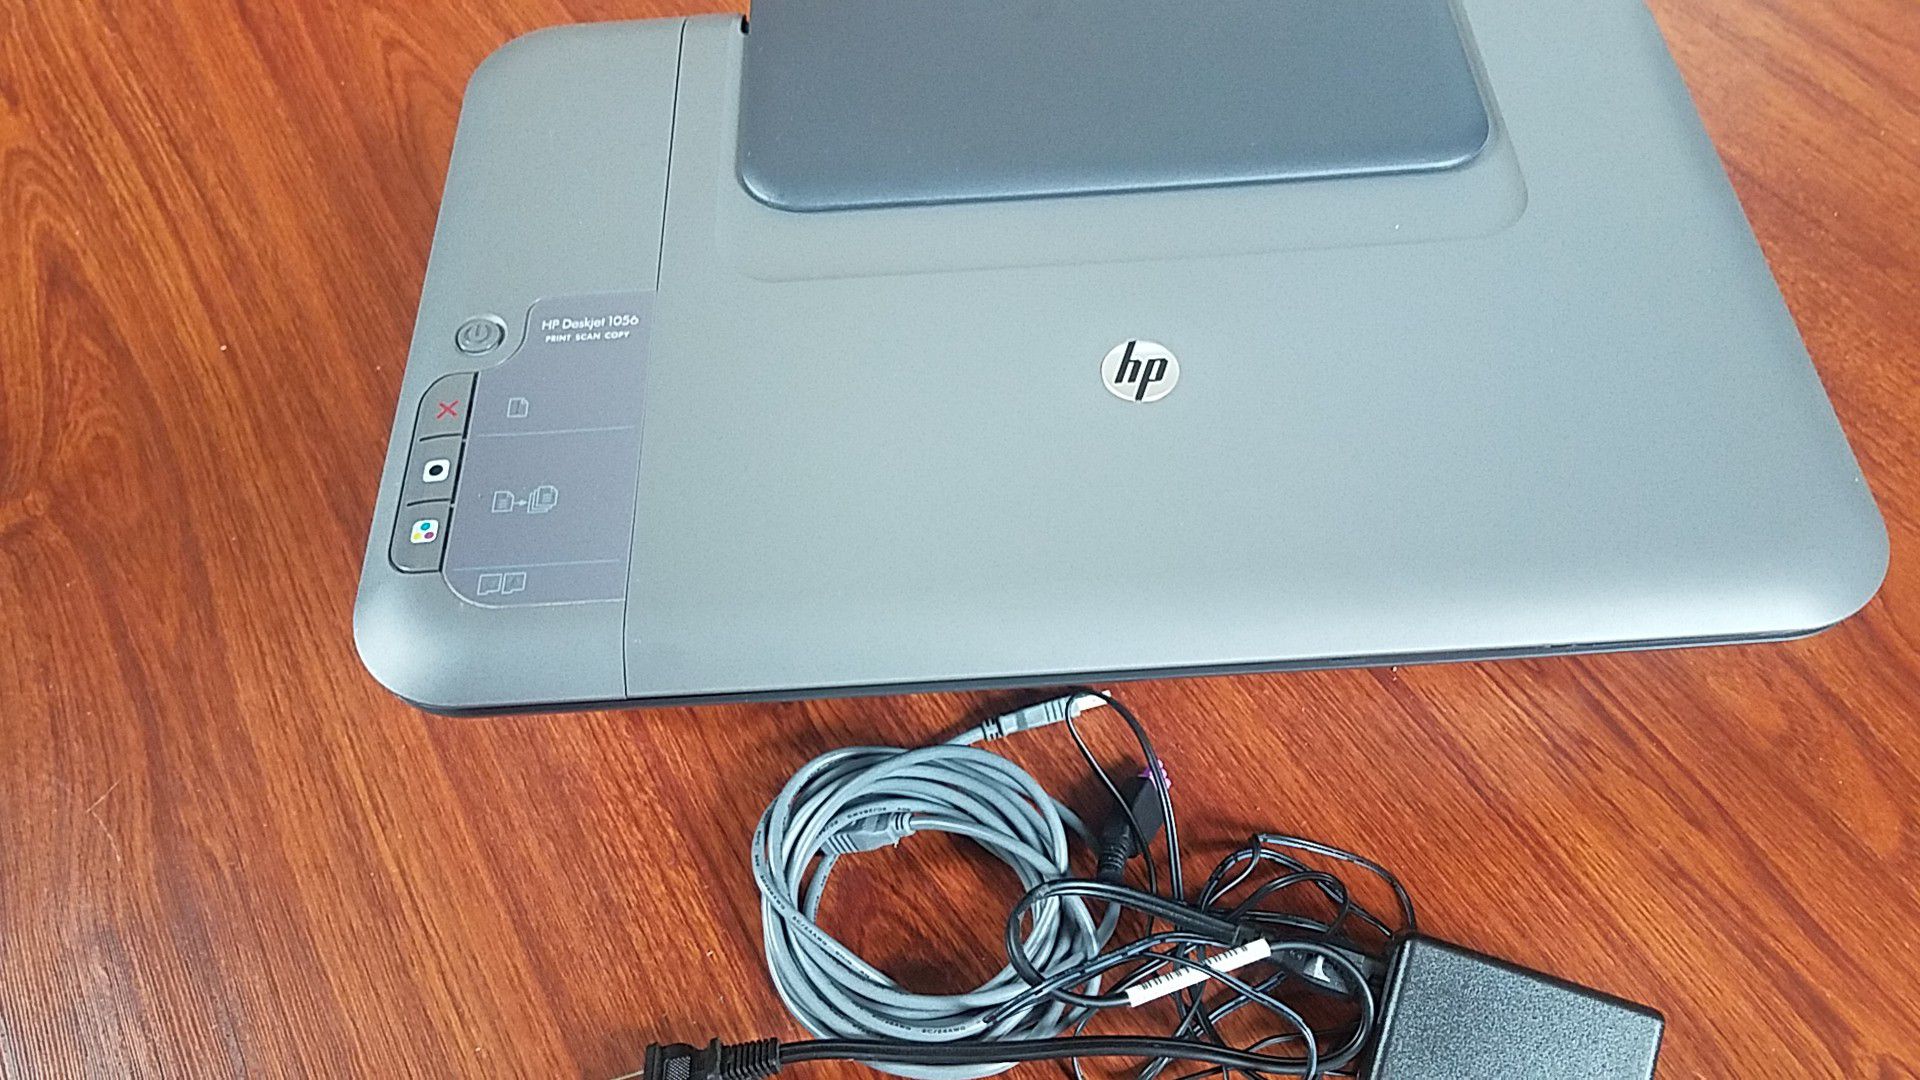 Free, Brand new HP printer.